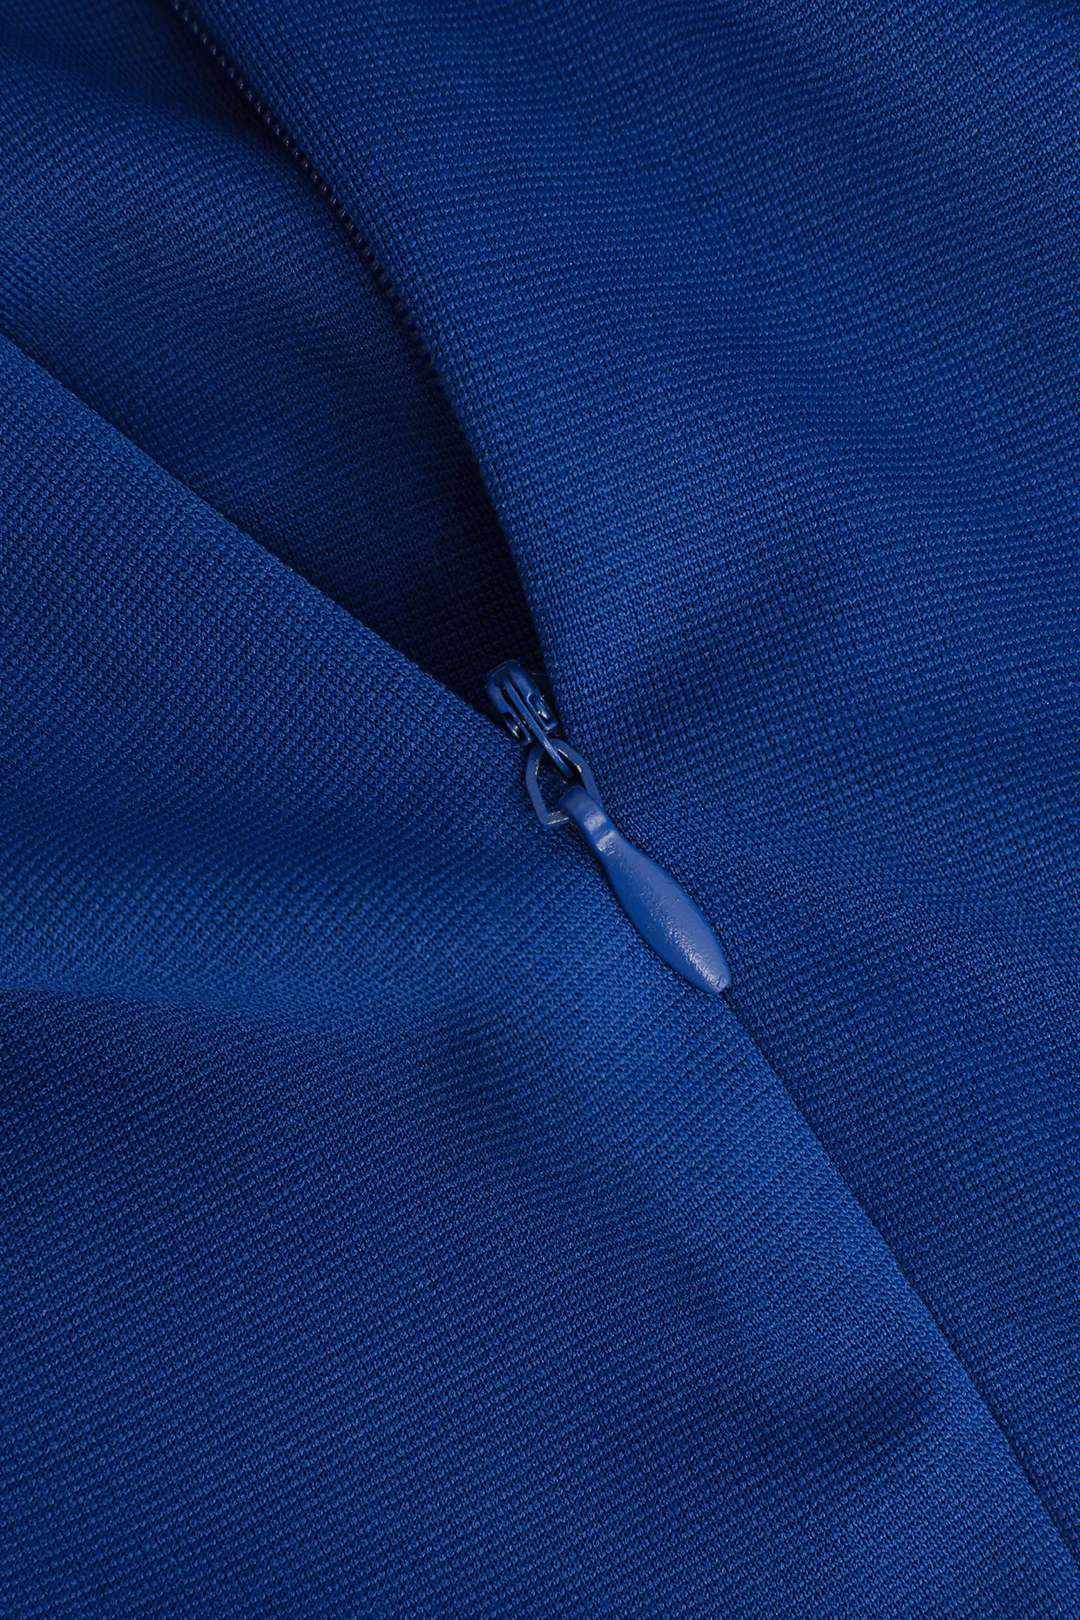 Assymmetric Cloak Sleeve Midi Dress